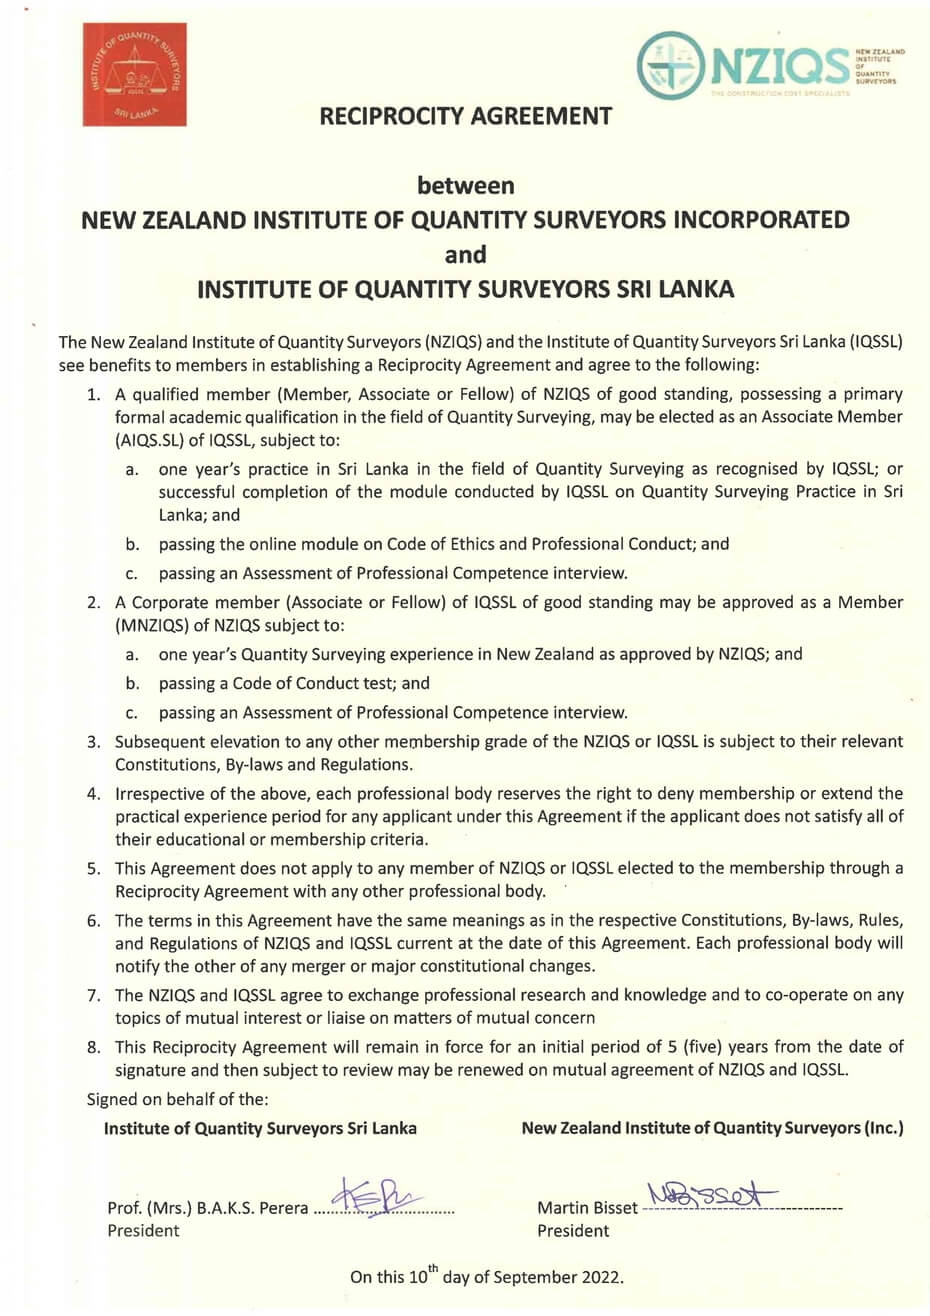 New Zealand NZIQS IQSSL Reciprocity